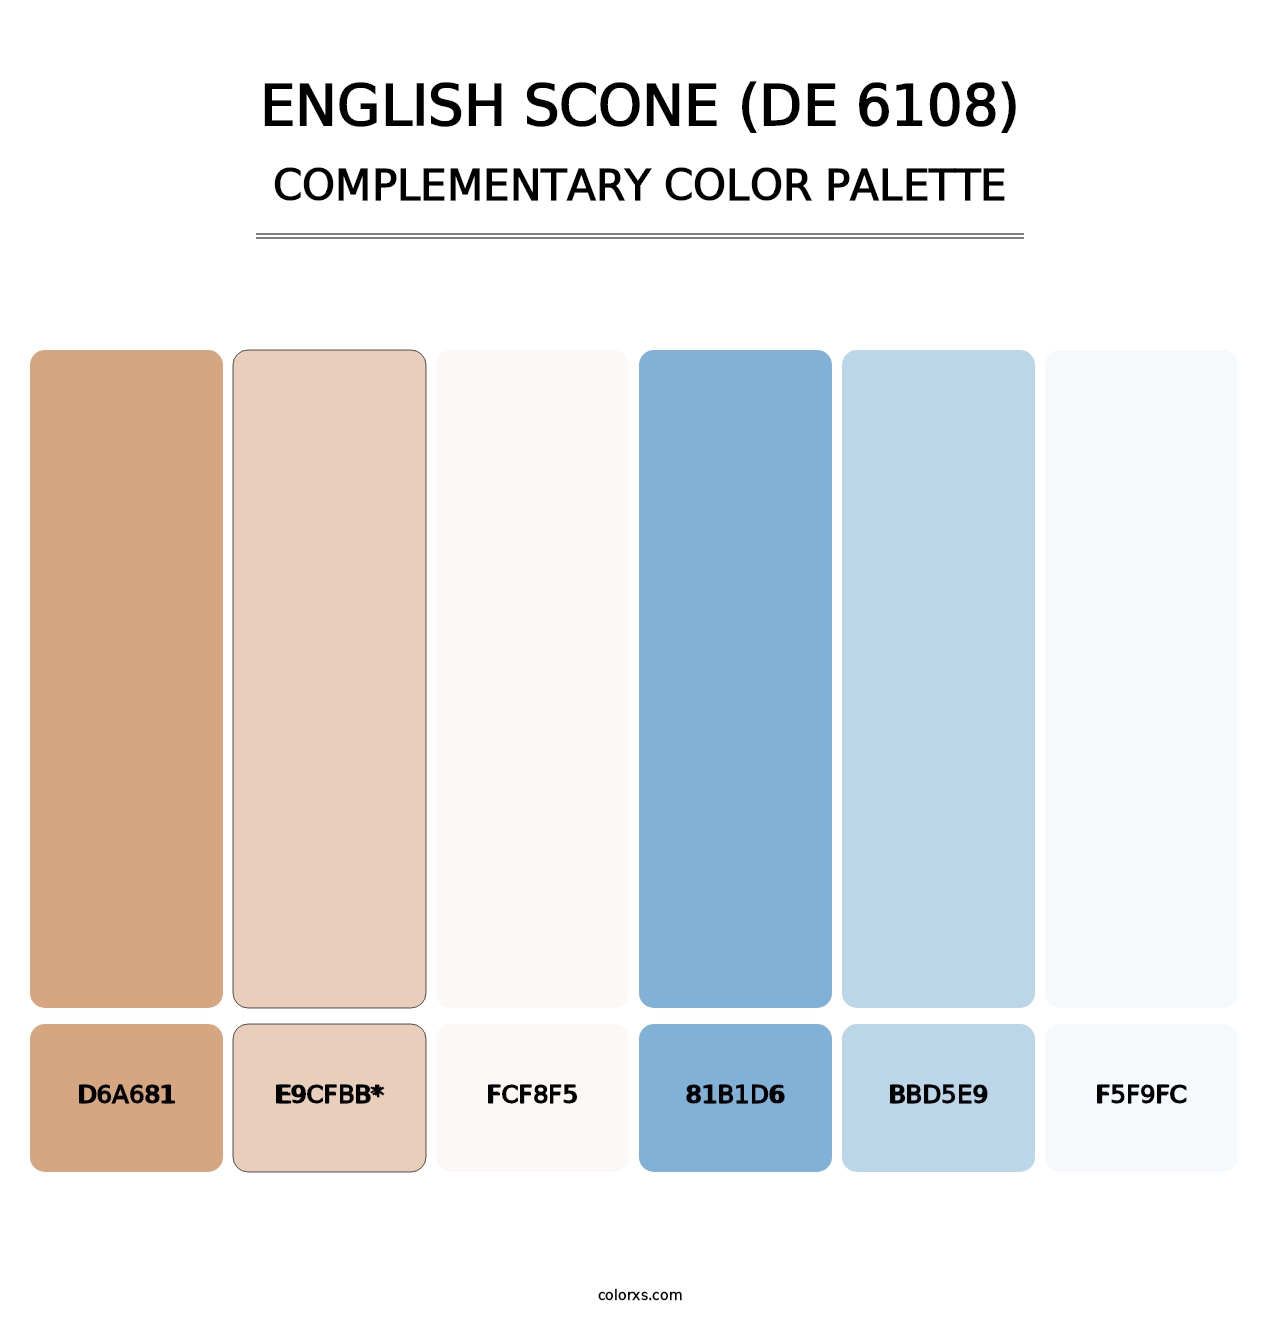 English Scone (DE 6108) - Complementary Color Palette